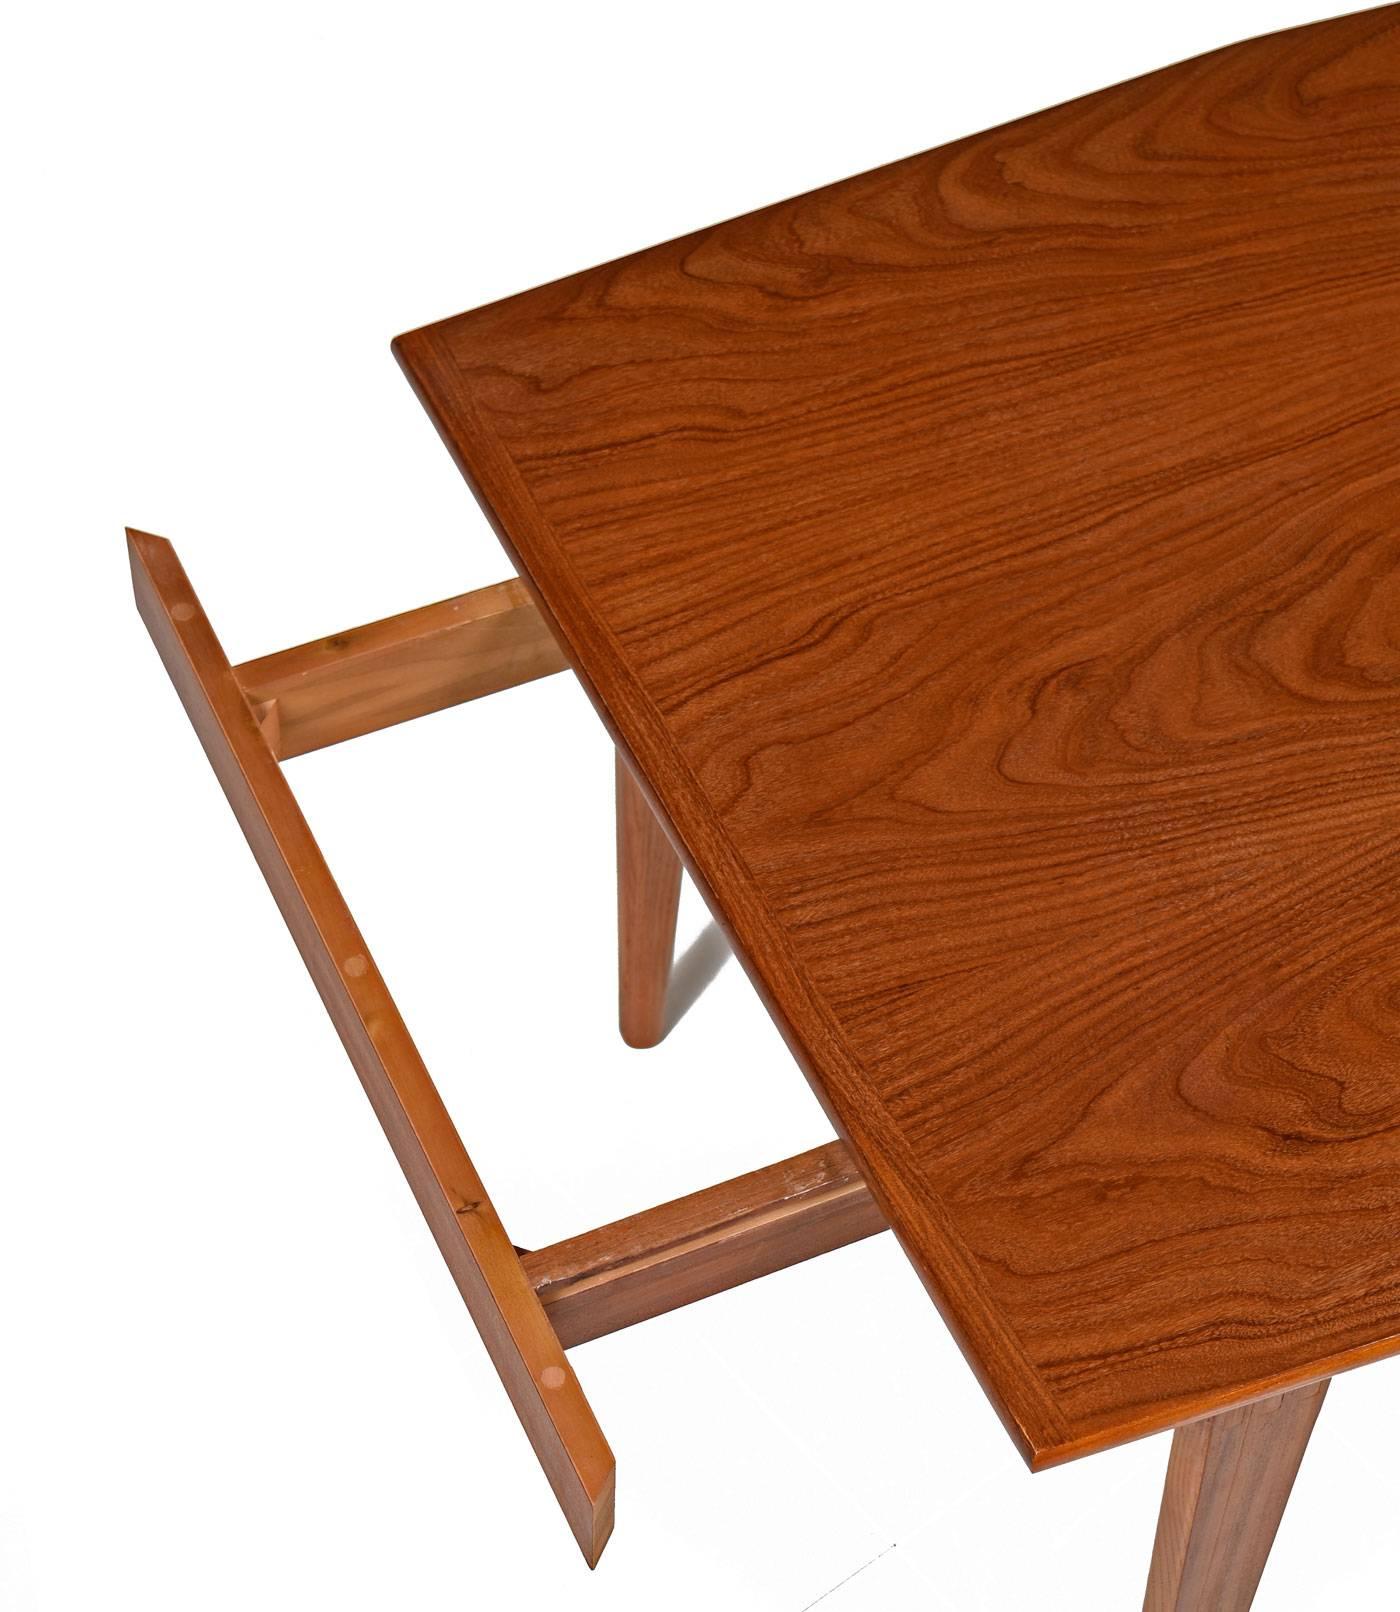 American Danish Modern Style Removable Leaf Walnut Dining Table, Circa 1950's